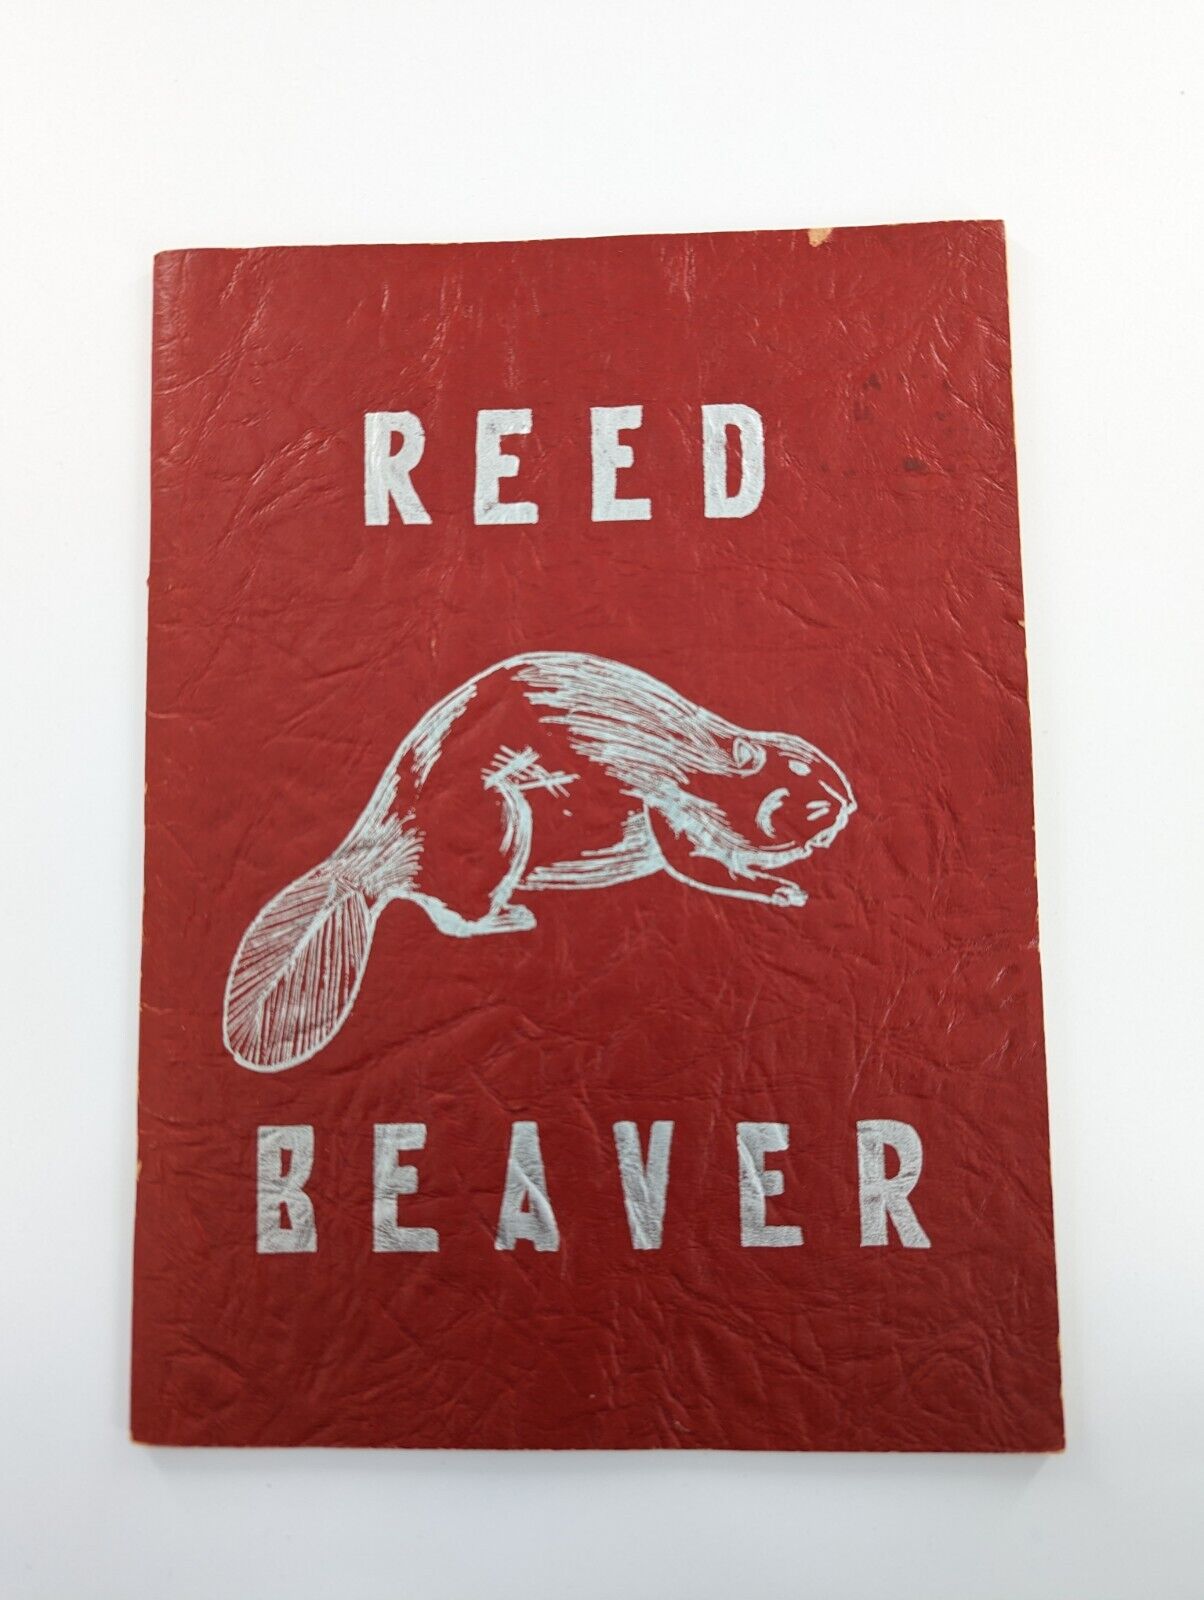 Reed Beaver Springfield Missouri 1948 Yearbook Paper back